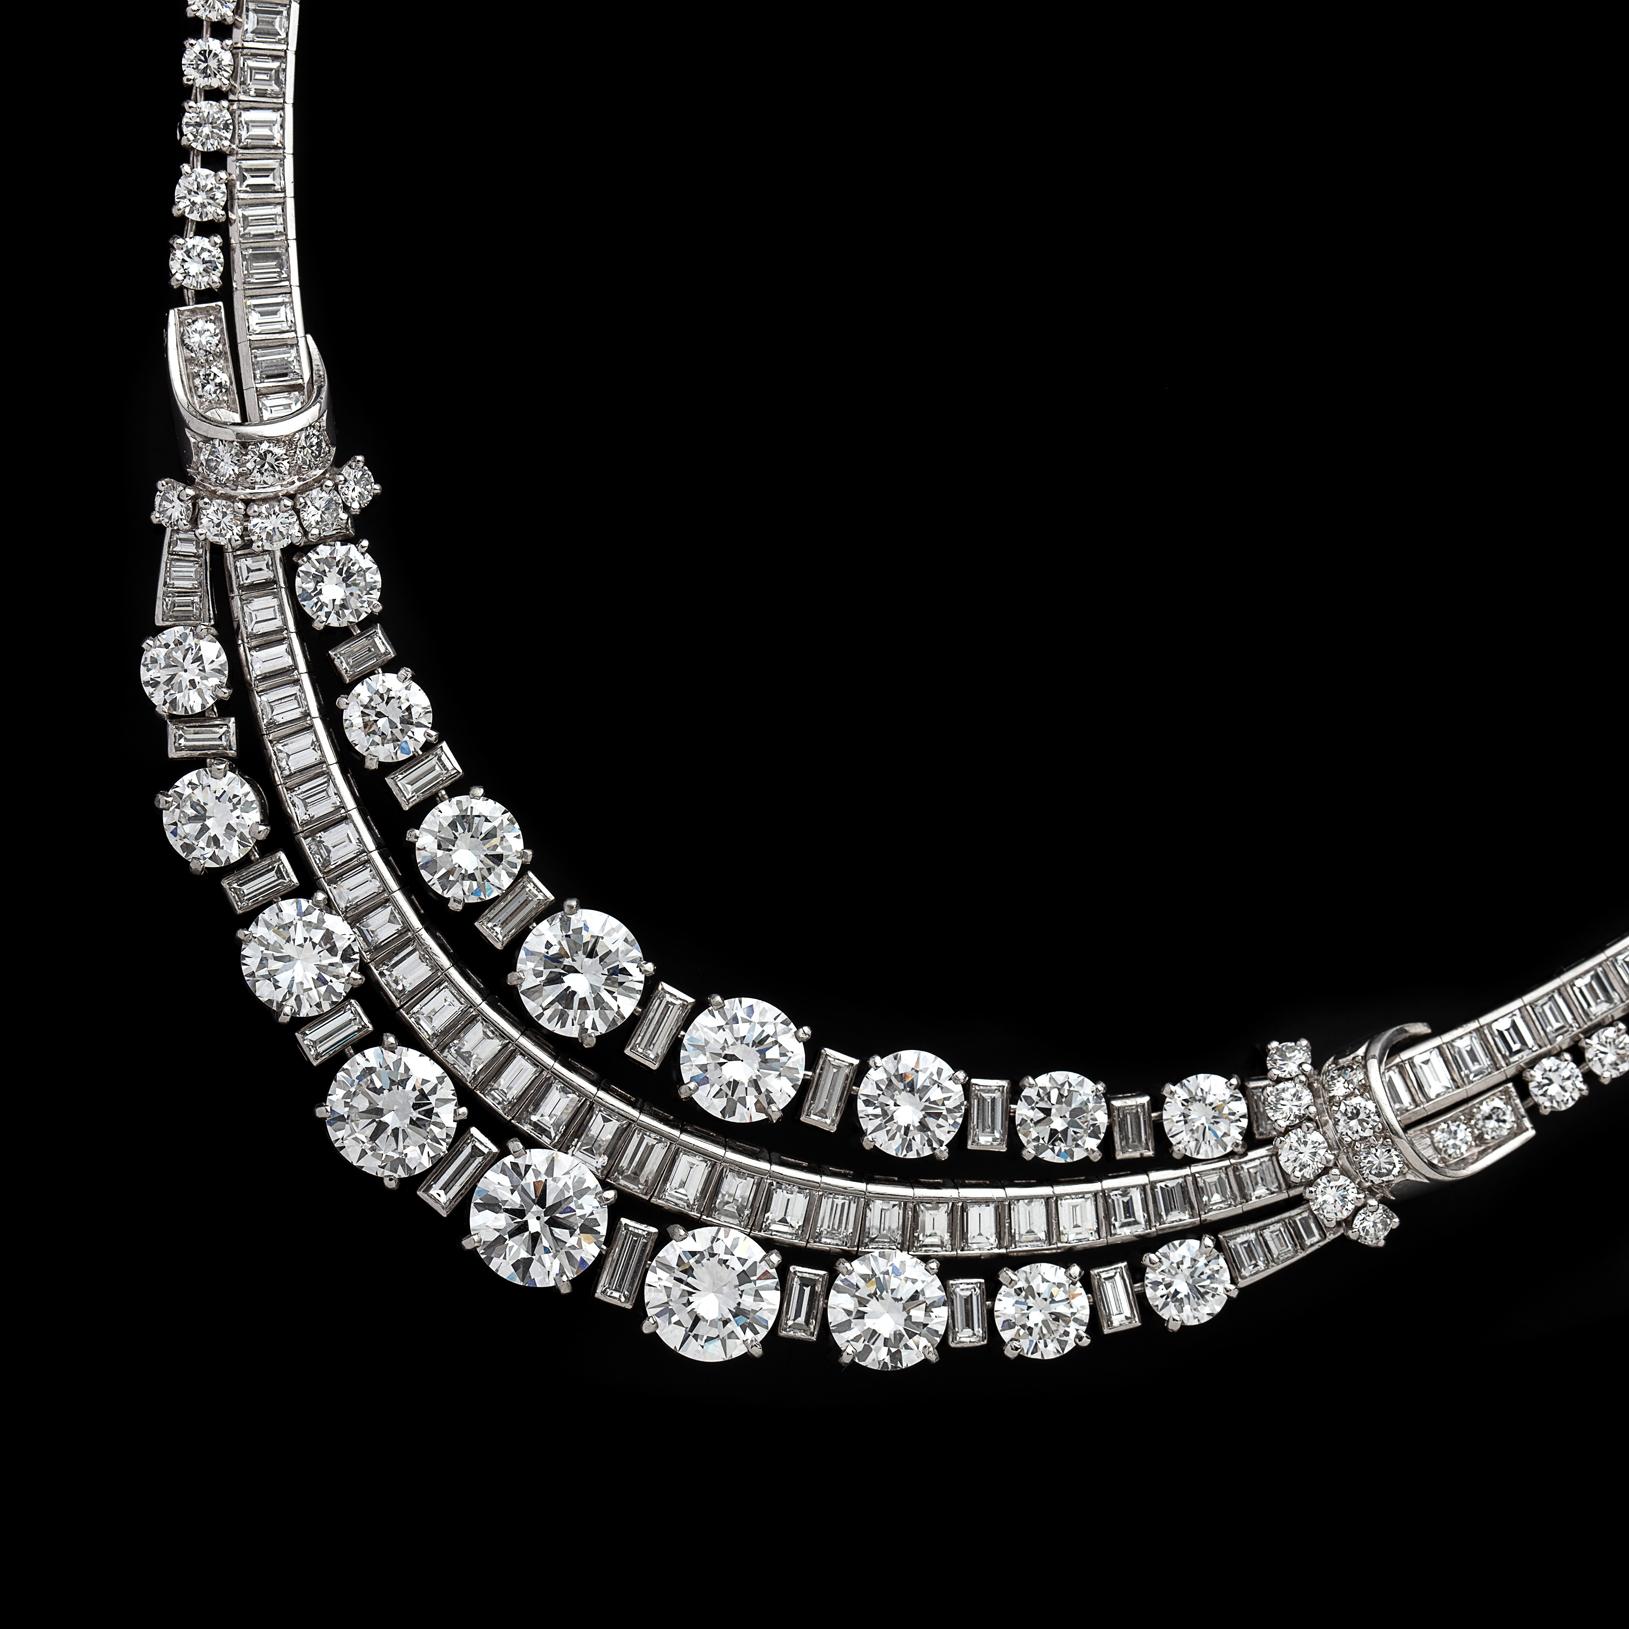 Circa 1950-60's, this spectacular Boucheron Paris platinum and 18k white gold necklace features 17 major round brilliant-cut diamonds, with 5 GIA stones: D/IF 2.01 carats, D/VVS2 1.70 carats, E/VS1 1.27 carats, D/VS2 1.52 carats and D/VS2 1.33